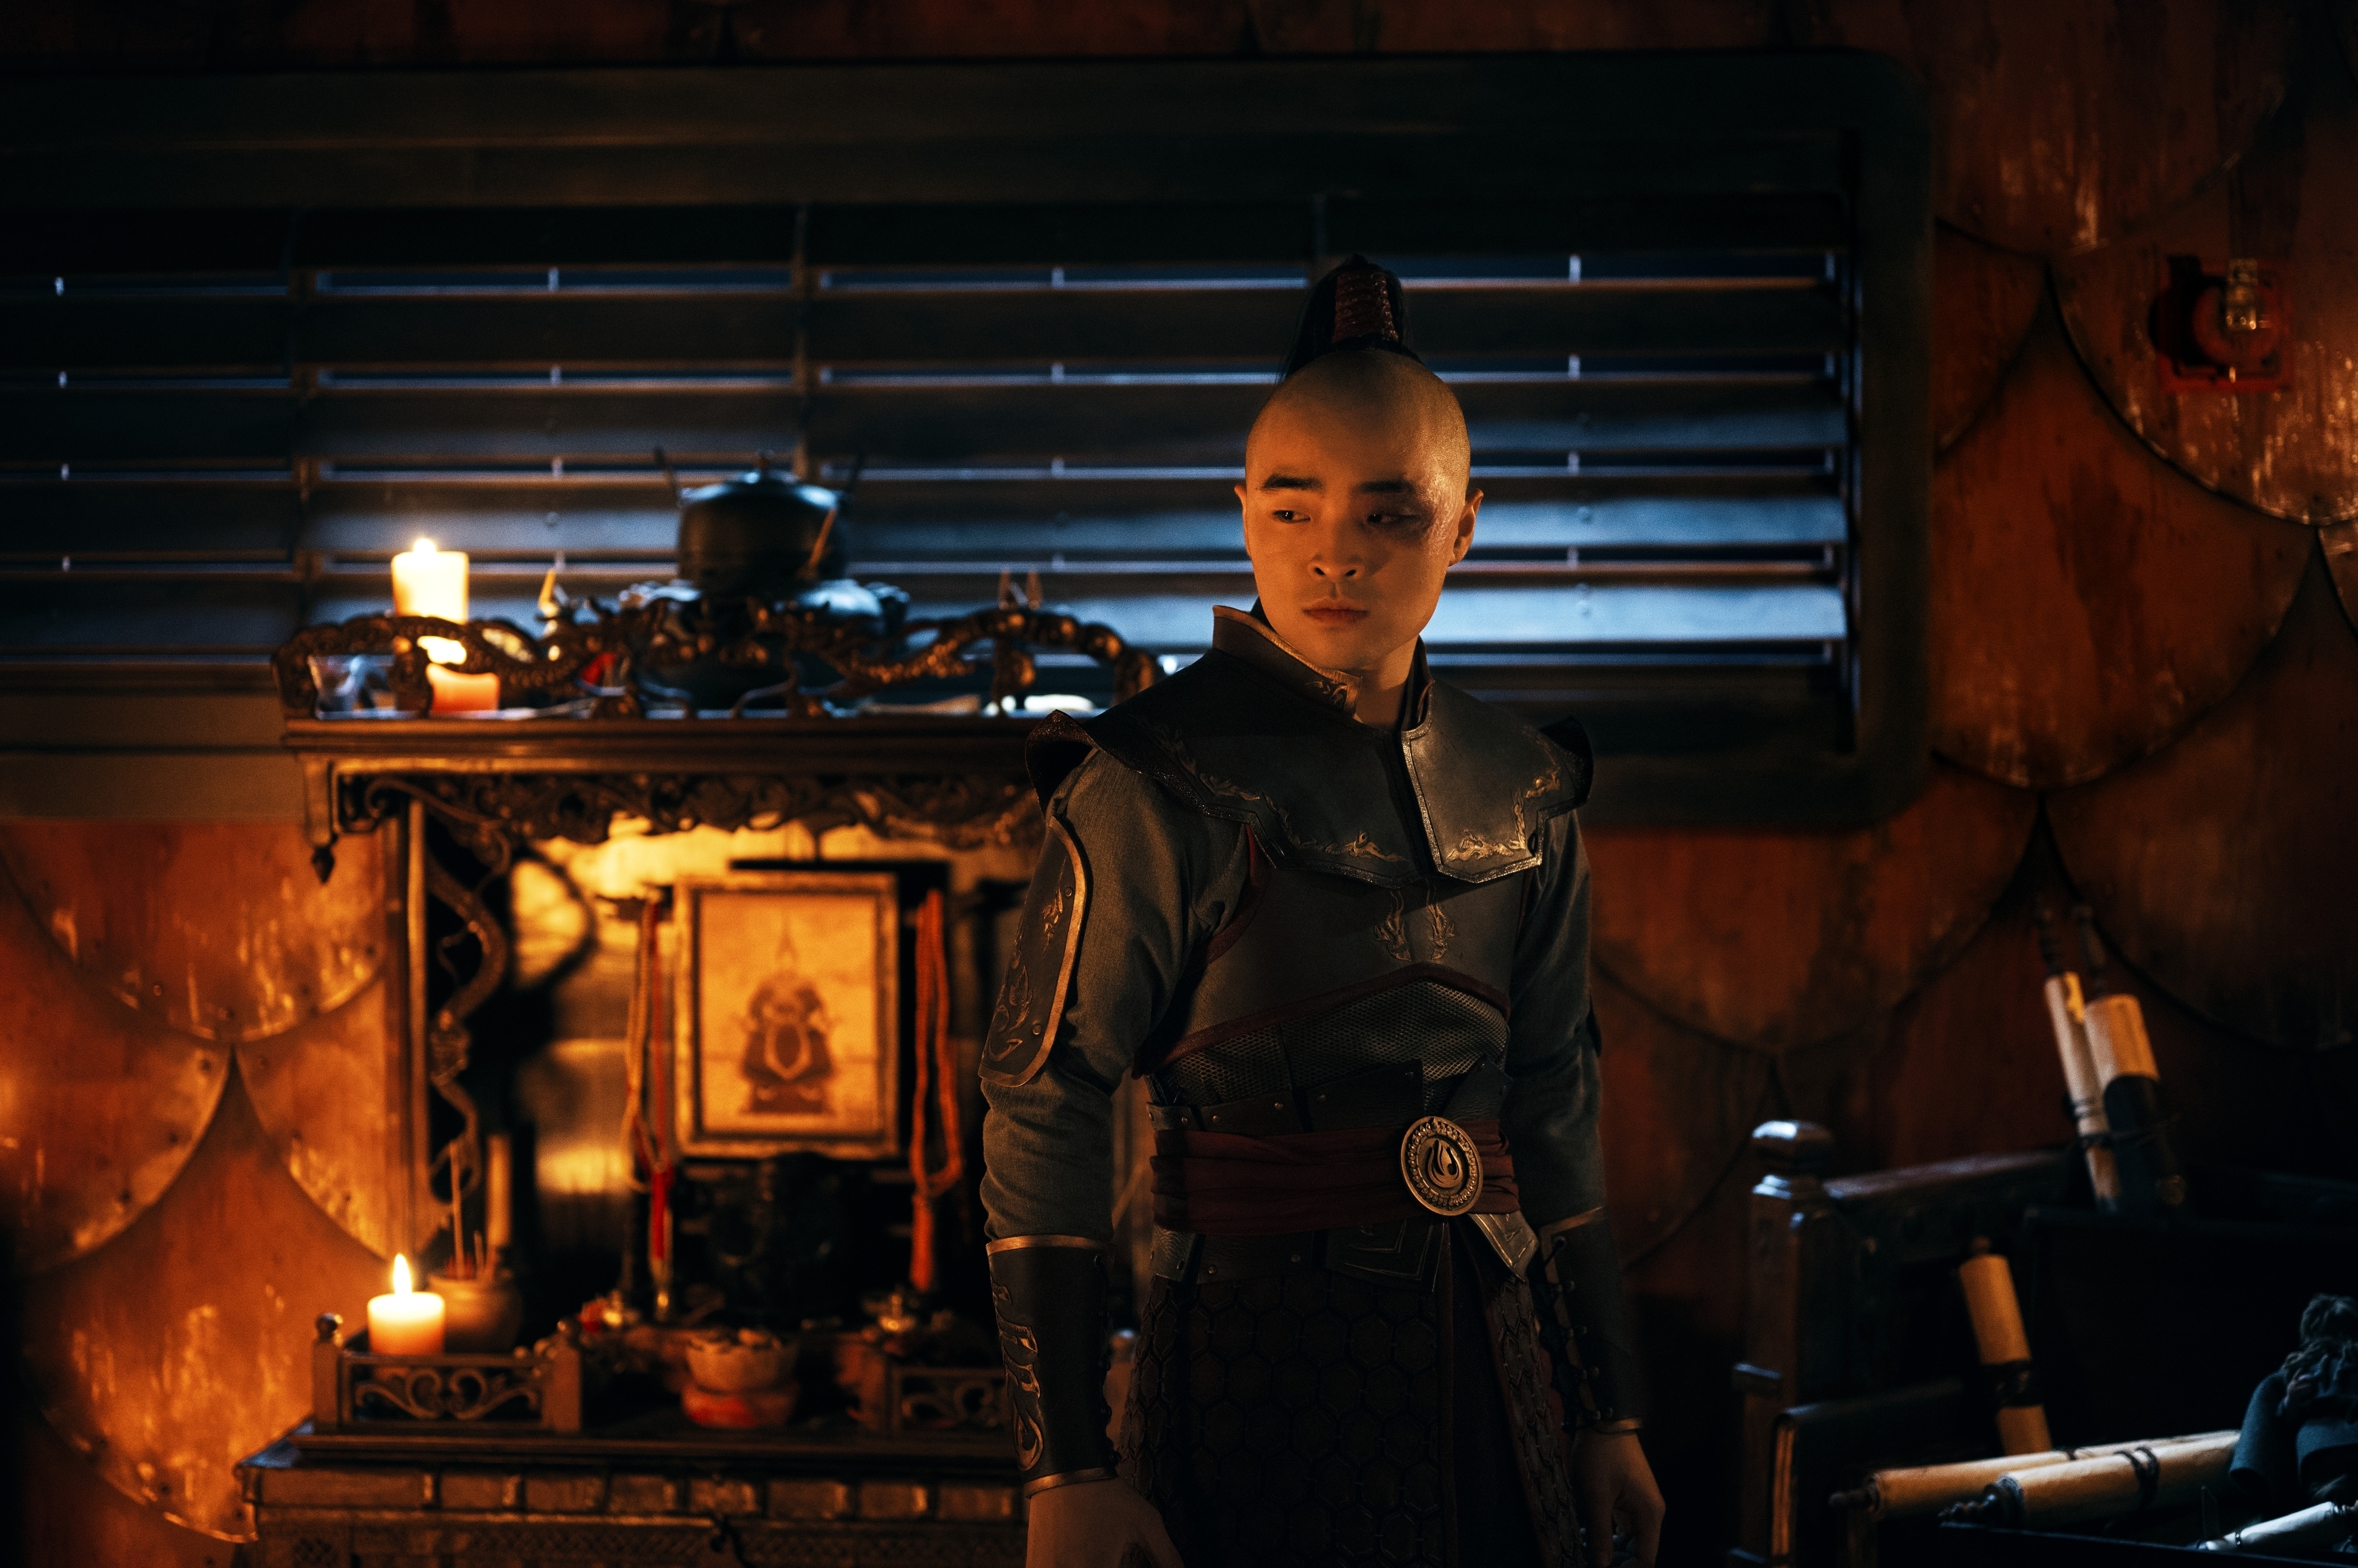 Dallas Liu as Prince Zuko in season 1 of Avatar: The Last Airbender